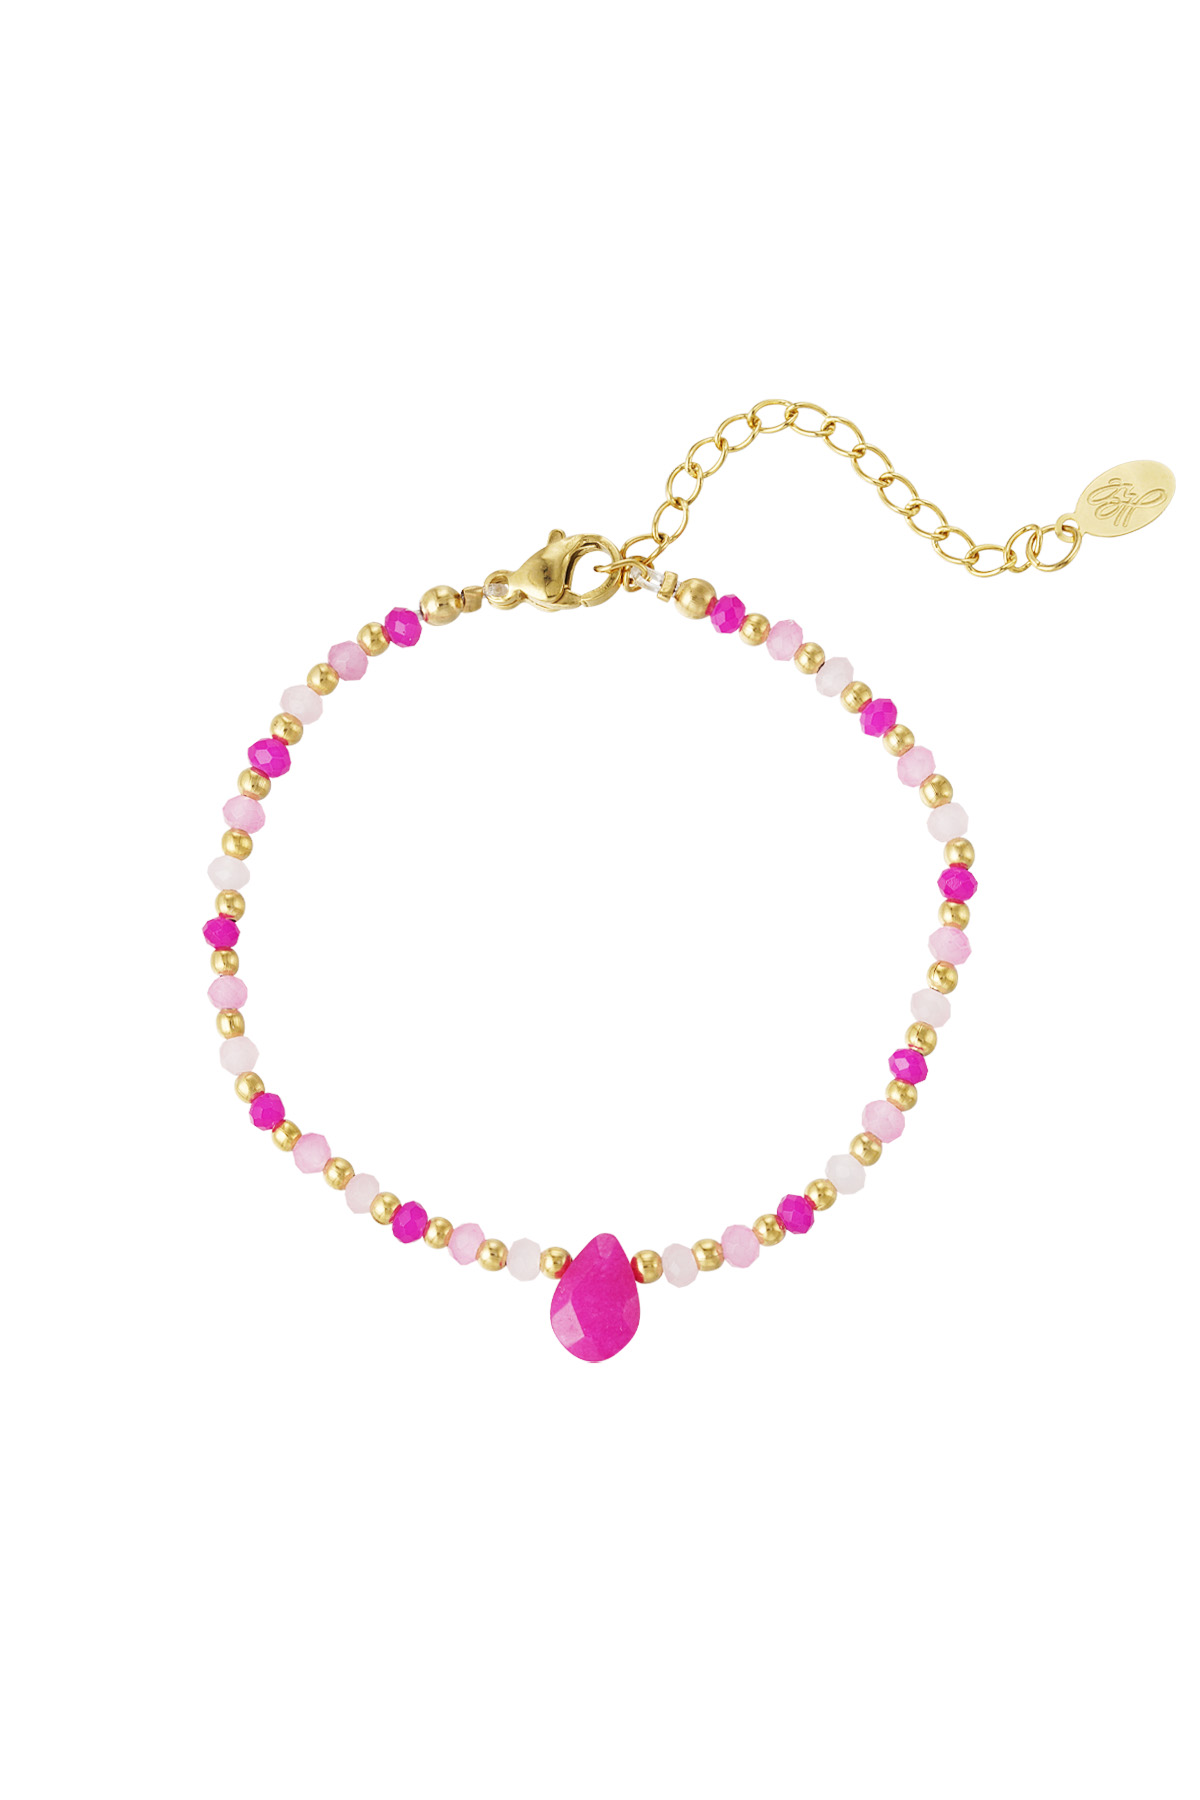 Bead bracelet with drop charm - fuchsia